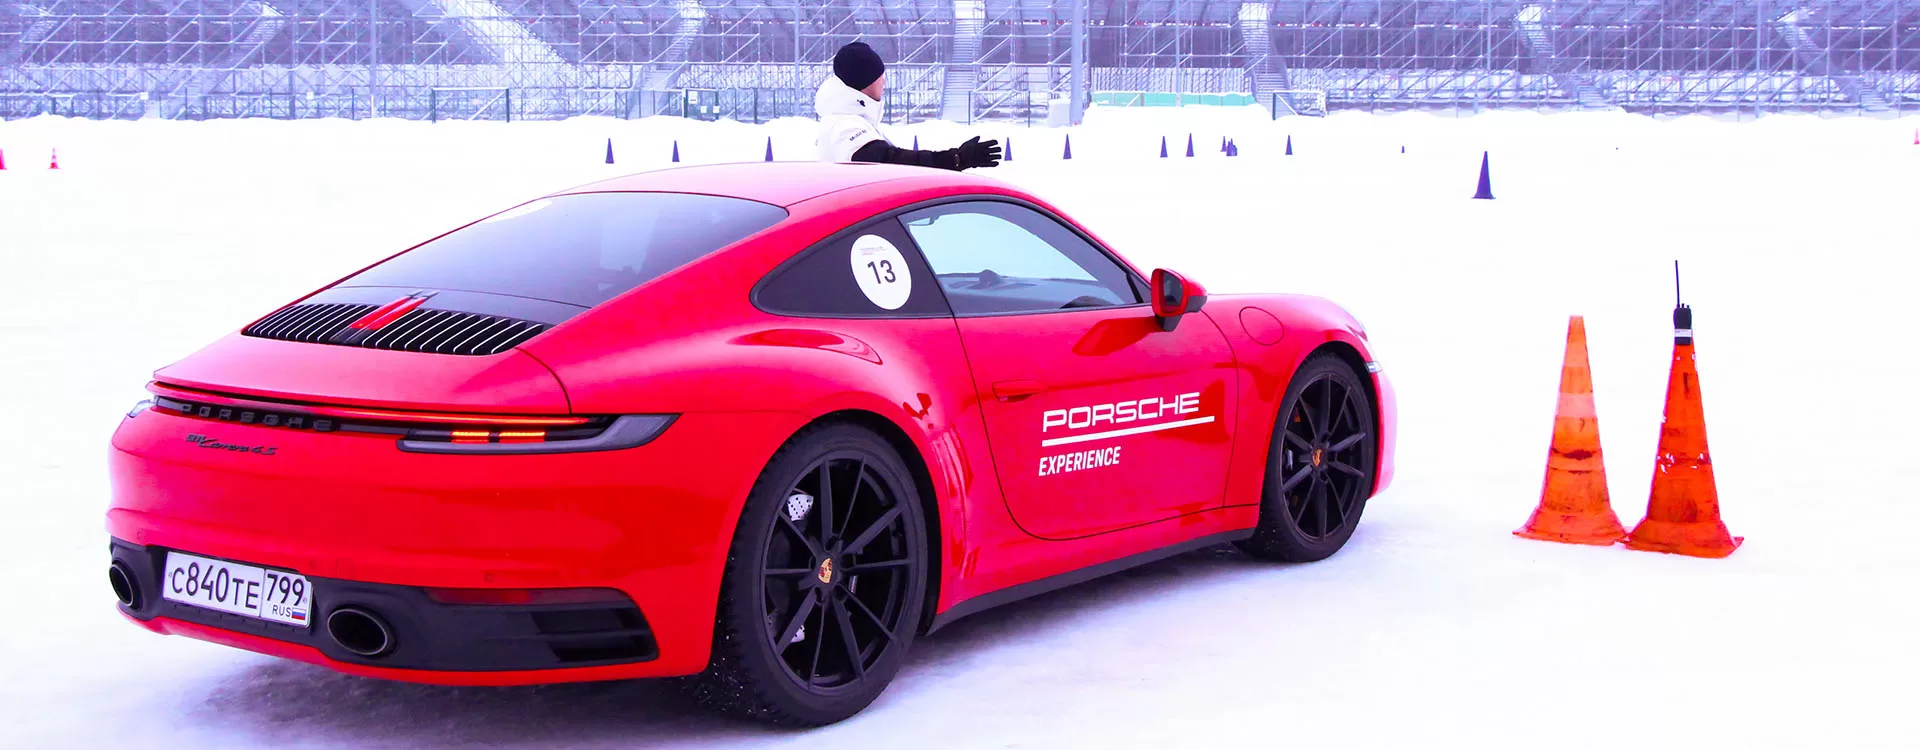 Porsche Experience Winter 2021